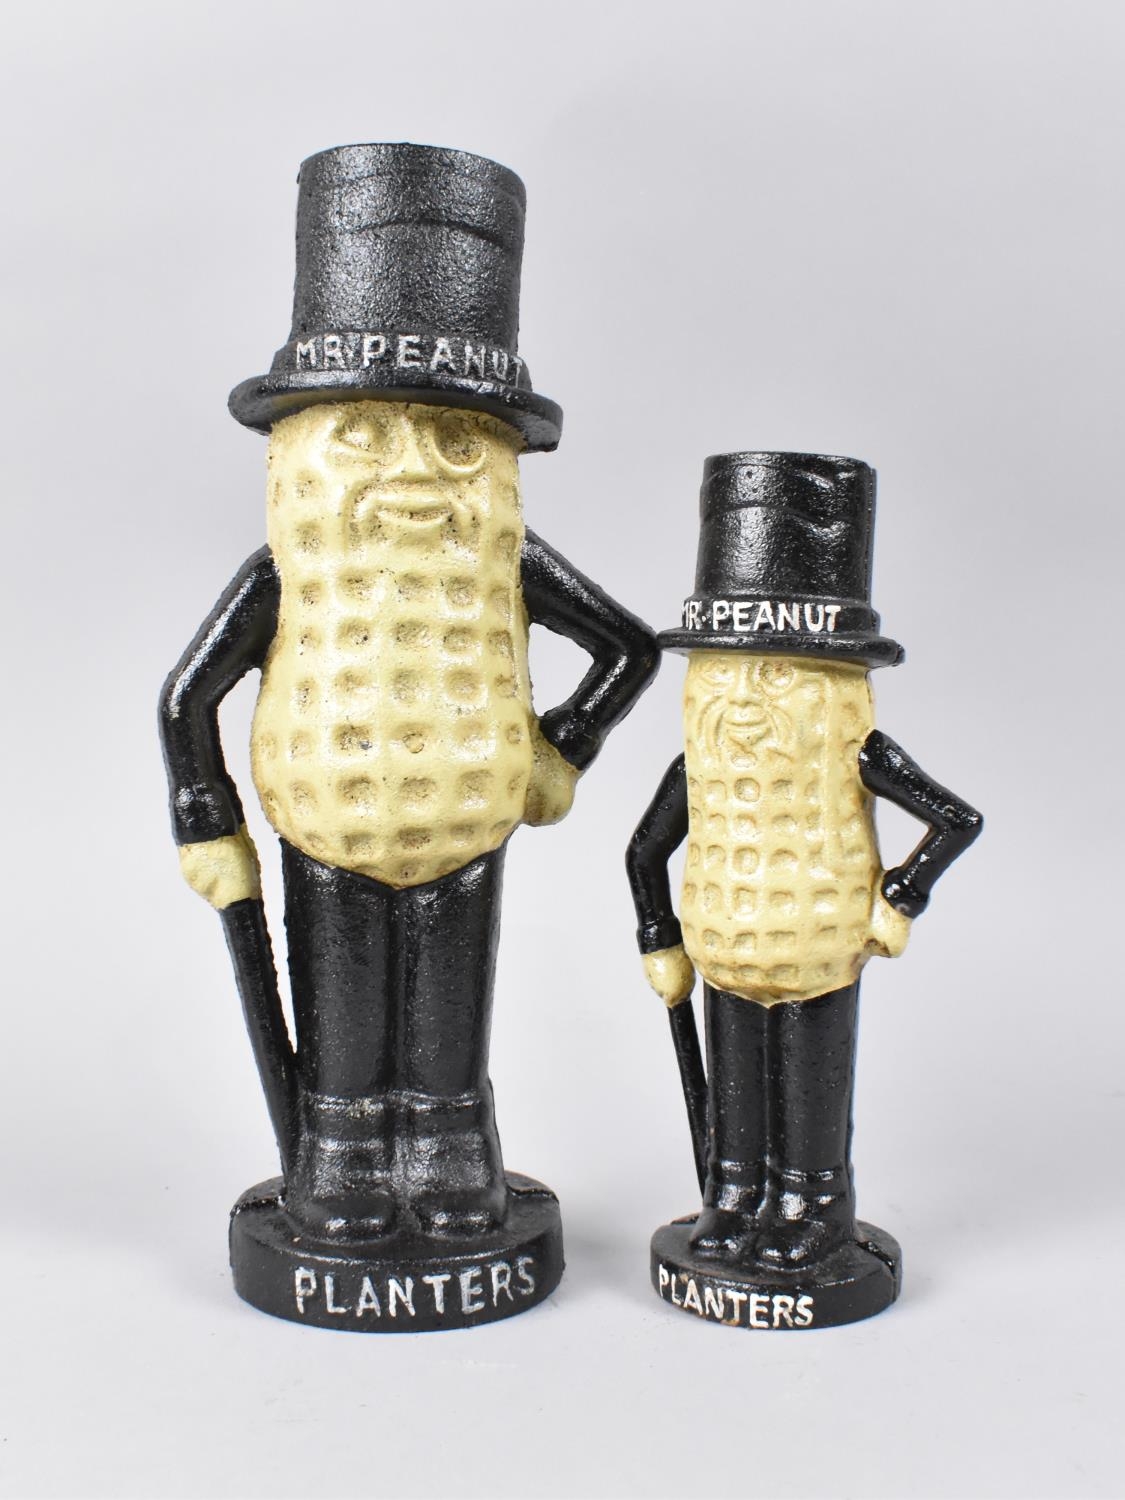 Two Cast Metal Advertising Money Banks for Planters, Mr Peanut, Tallest 26cms, (Plus VAT)